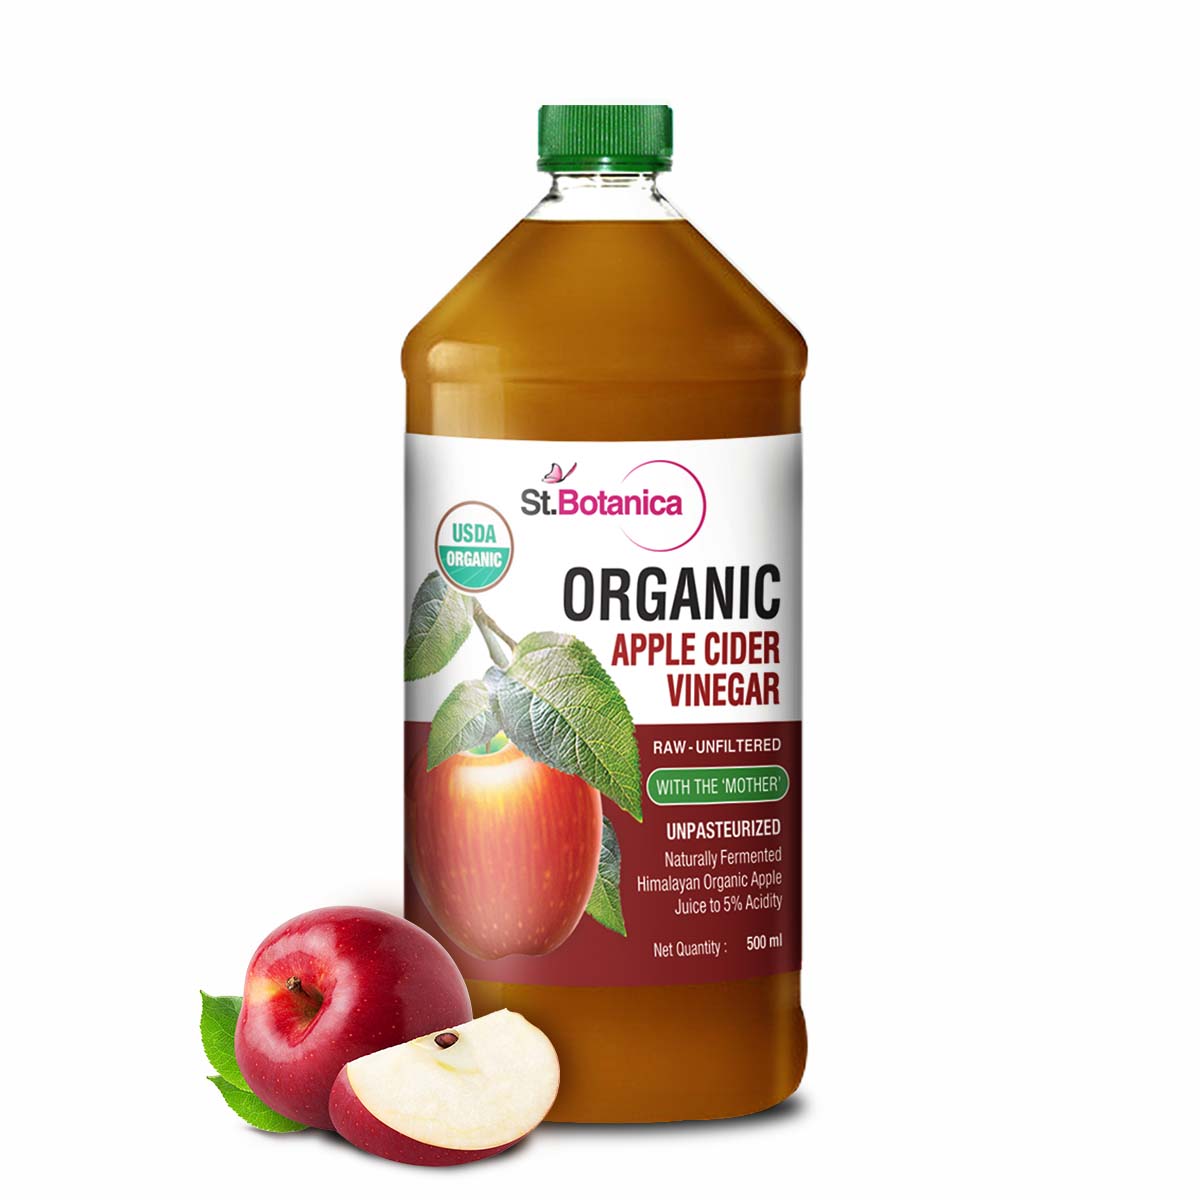 St.Botanica Usda Organic Apple Cider Vinegar - Raw, Unfiltered With Mother Vinegar - 500Ml